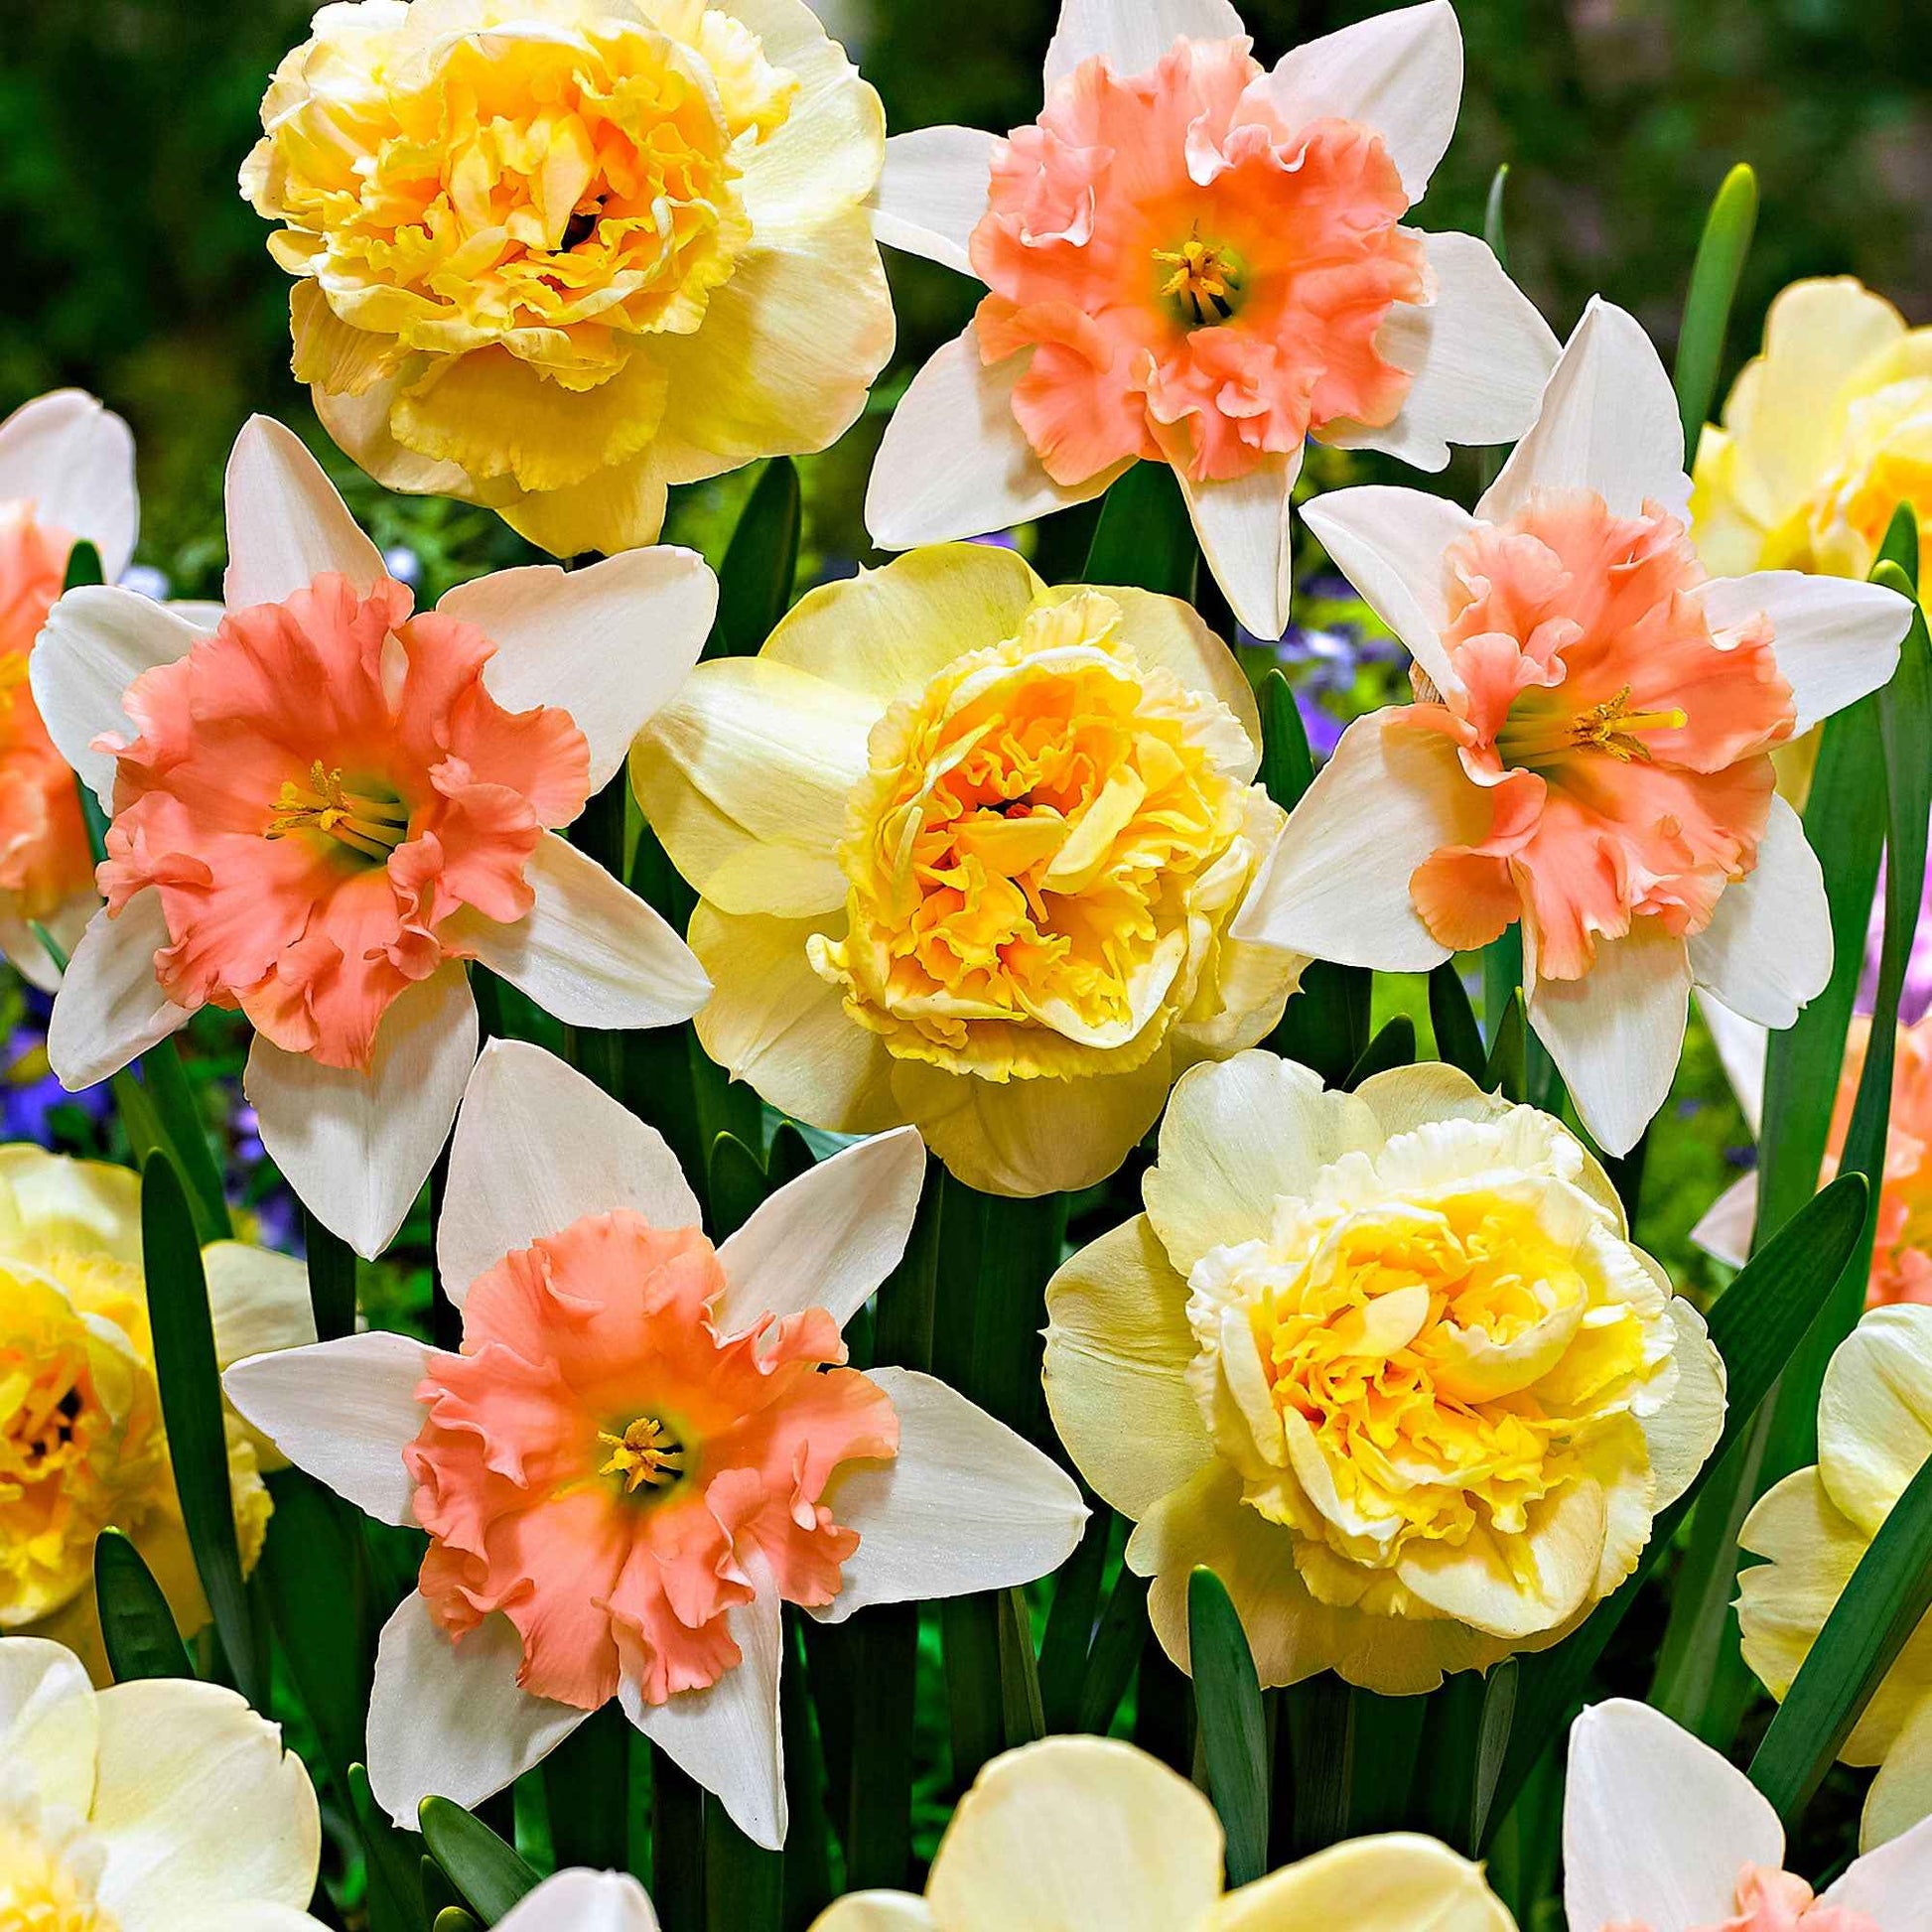 7x Dubbelbloemige narcissen Narcissus - Mix ’Art Design’ + ’Dear Love’ geel-roze - Alle bloembollen